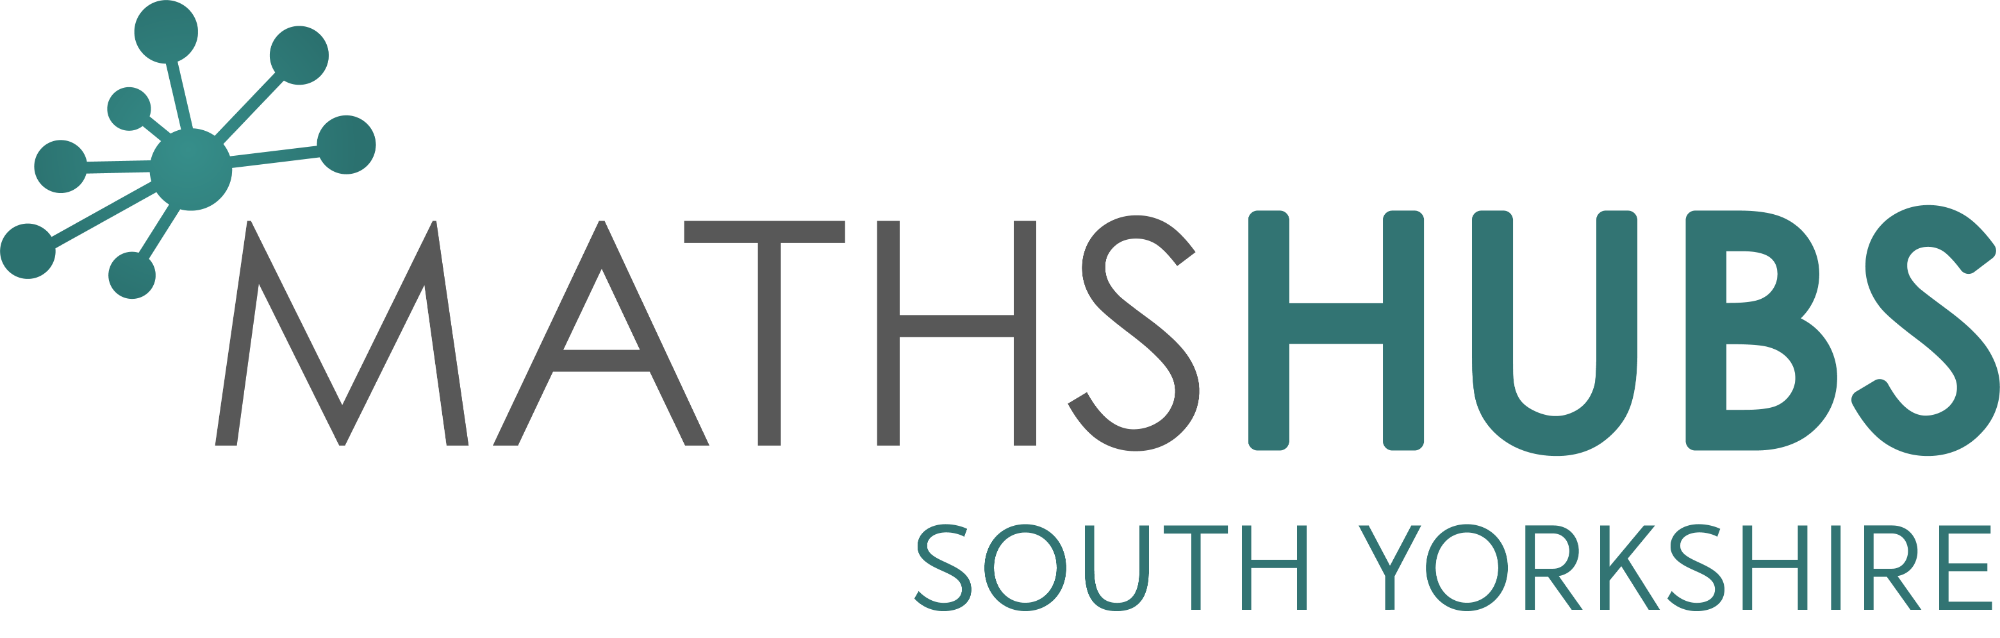 The South Yorkshire Maths Hub